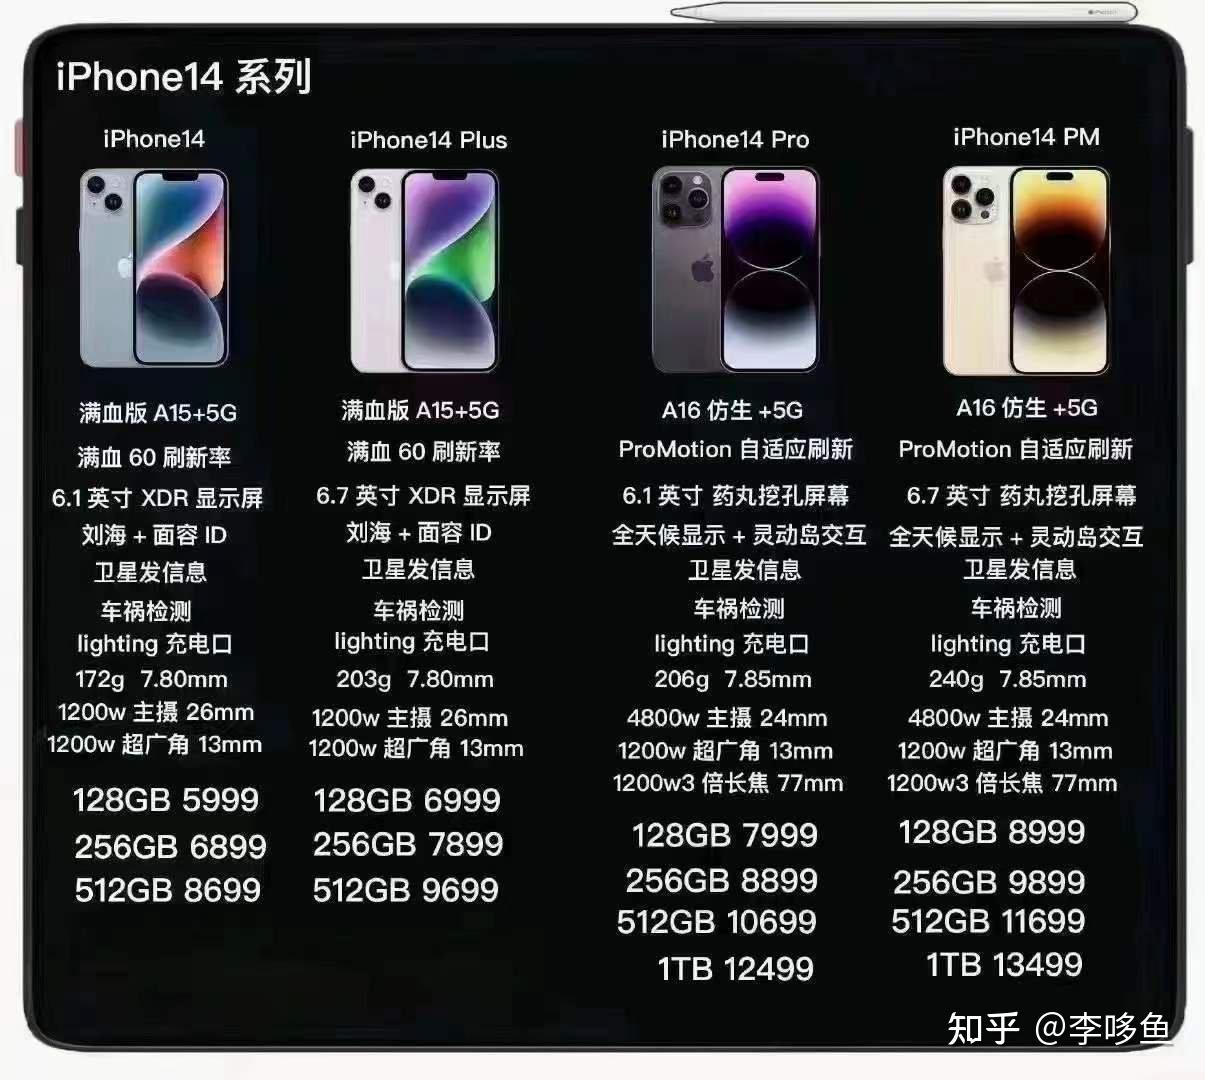 1 iphone 14